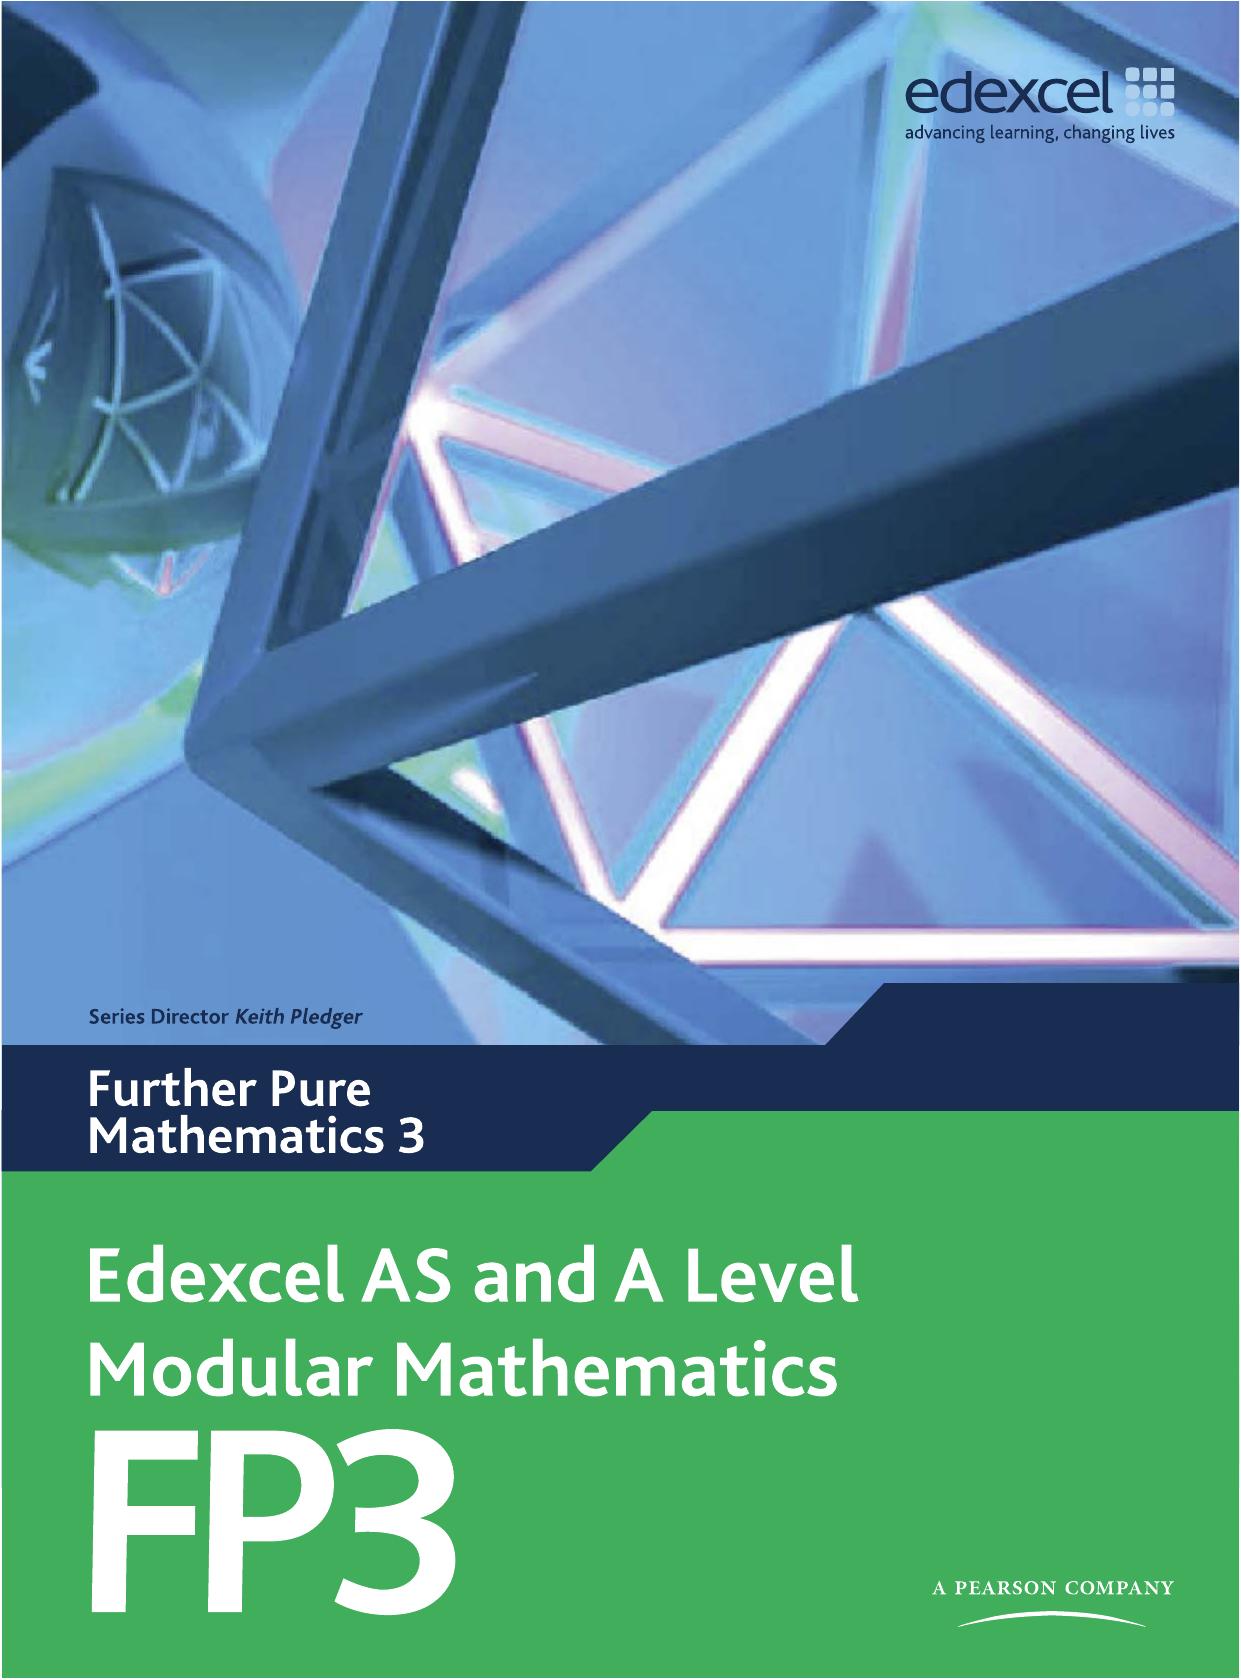 Edexcel AS and A level Modular Mathematics FP3